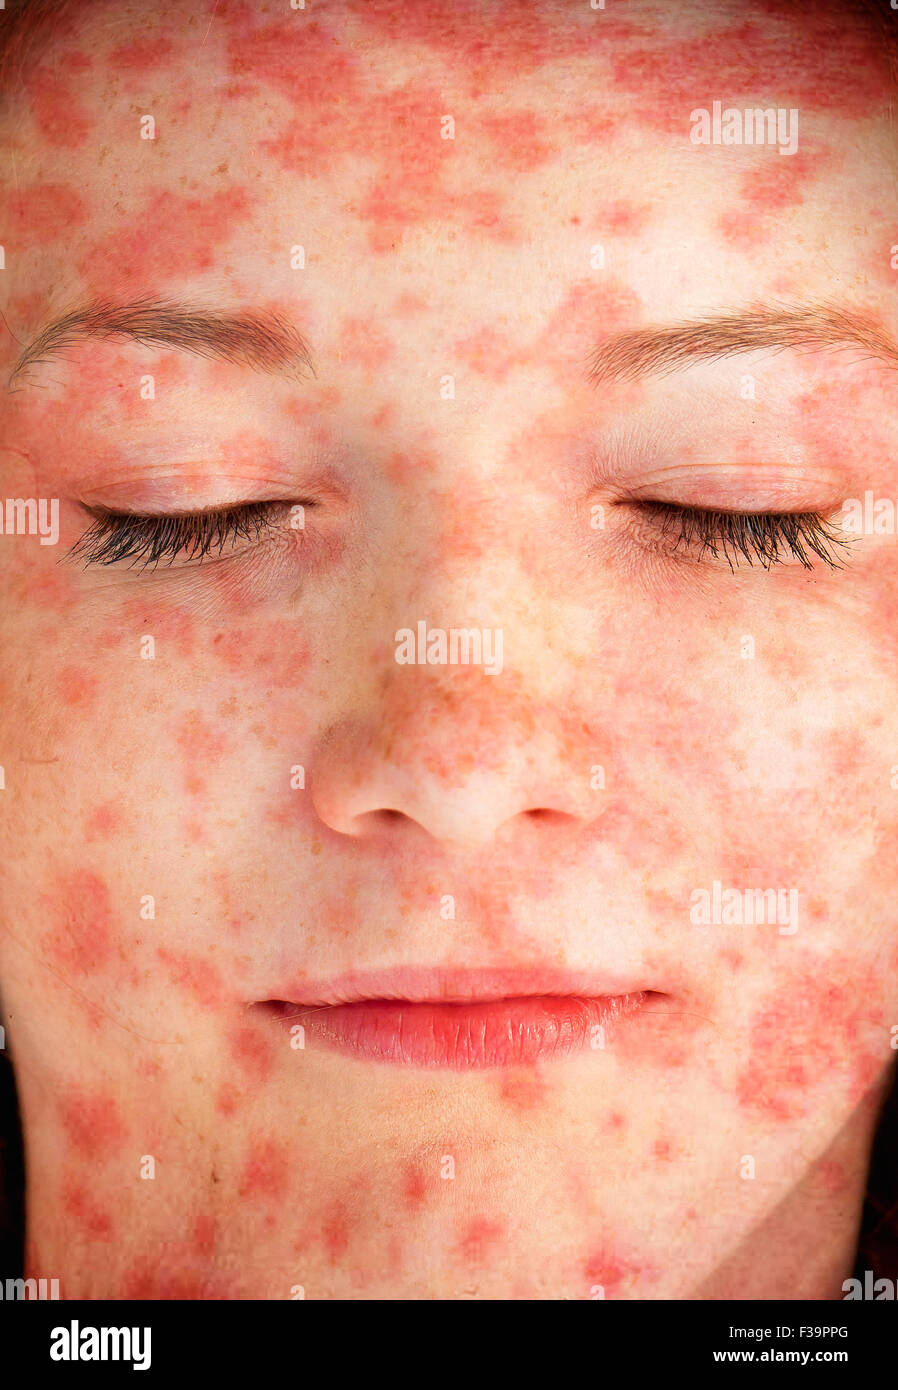 Young woman with skin rash Stock Photo